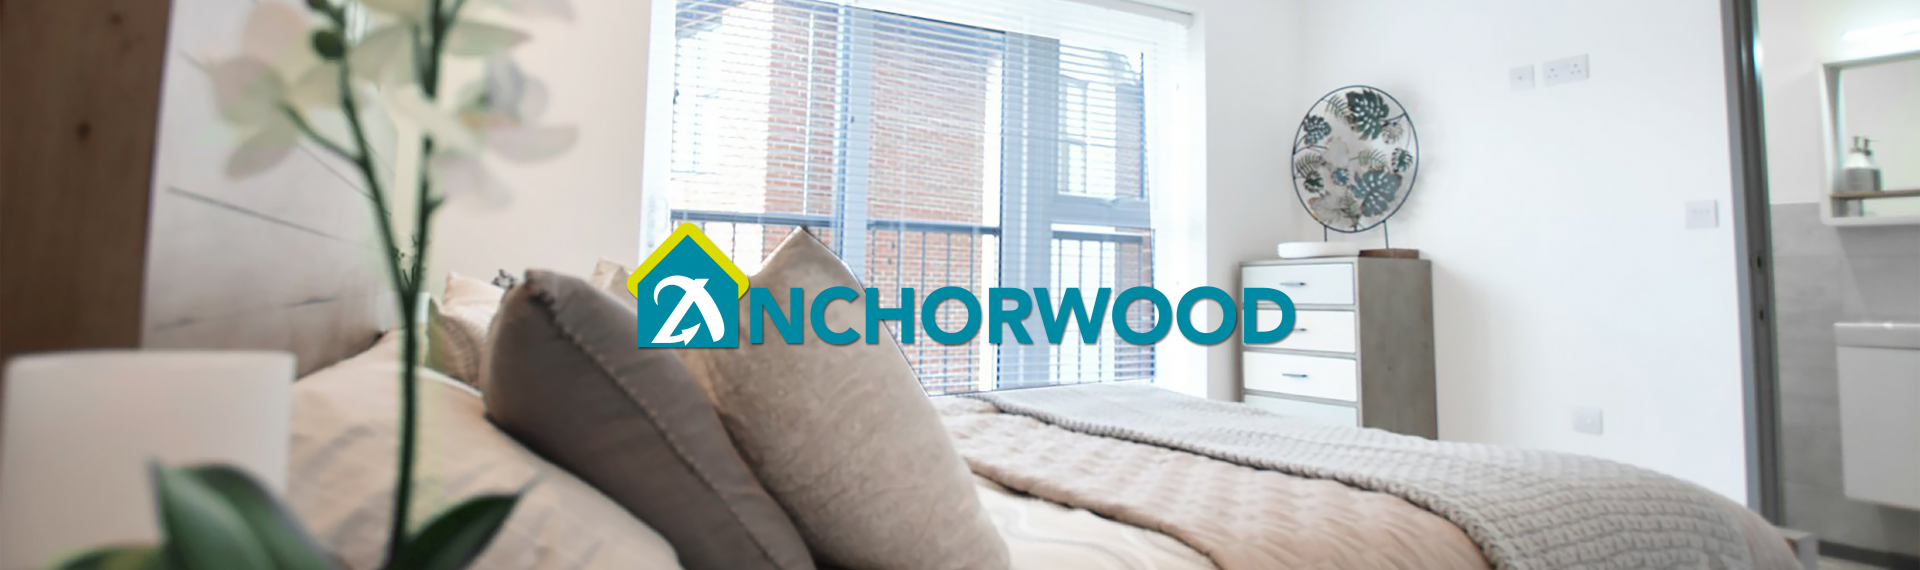 Anchorwood Ltd; bedroom furnished in soft neutrals